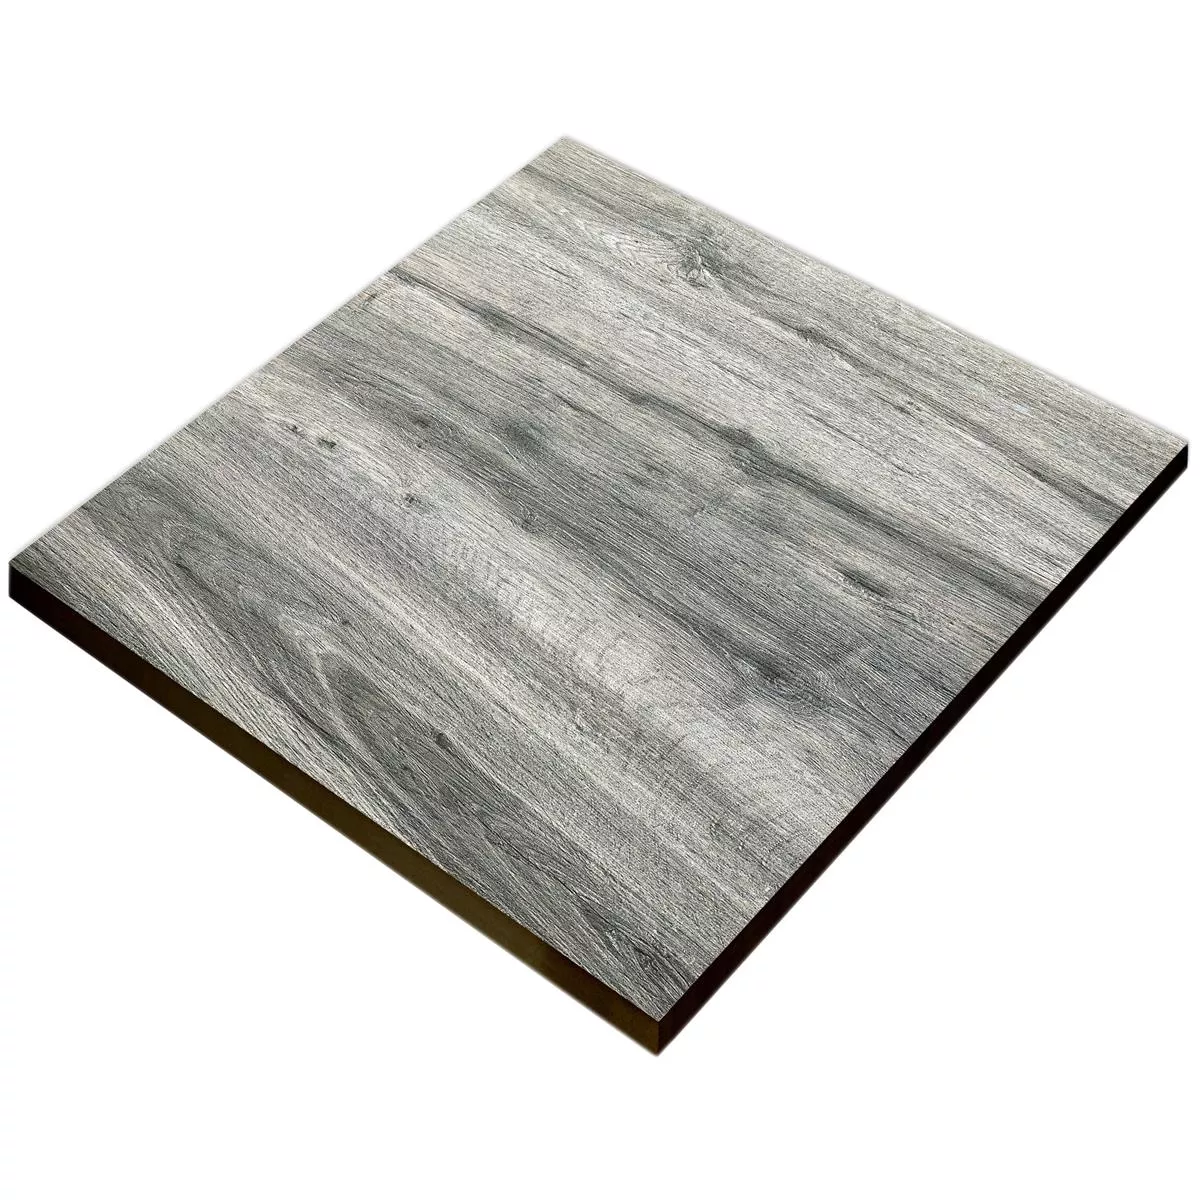 Sample Terrastegels Starwood Houtlook Grey 60x60cm